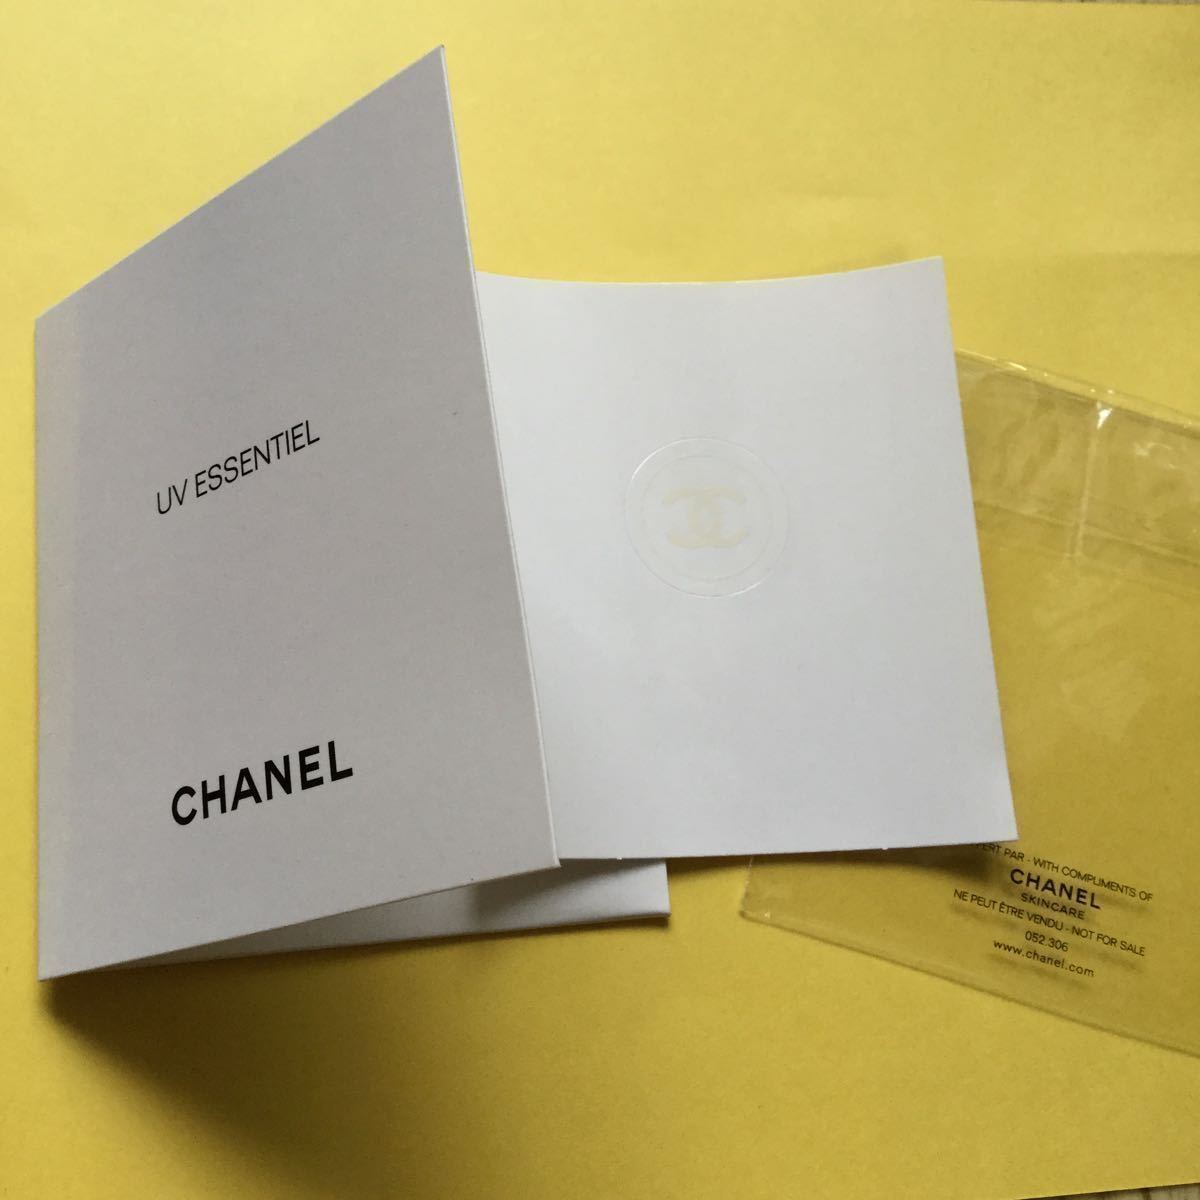  Chanel UV check here seal 3 sheets 